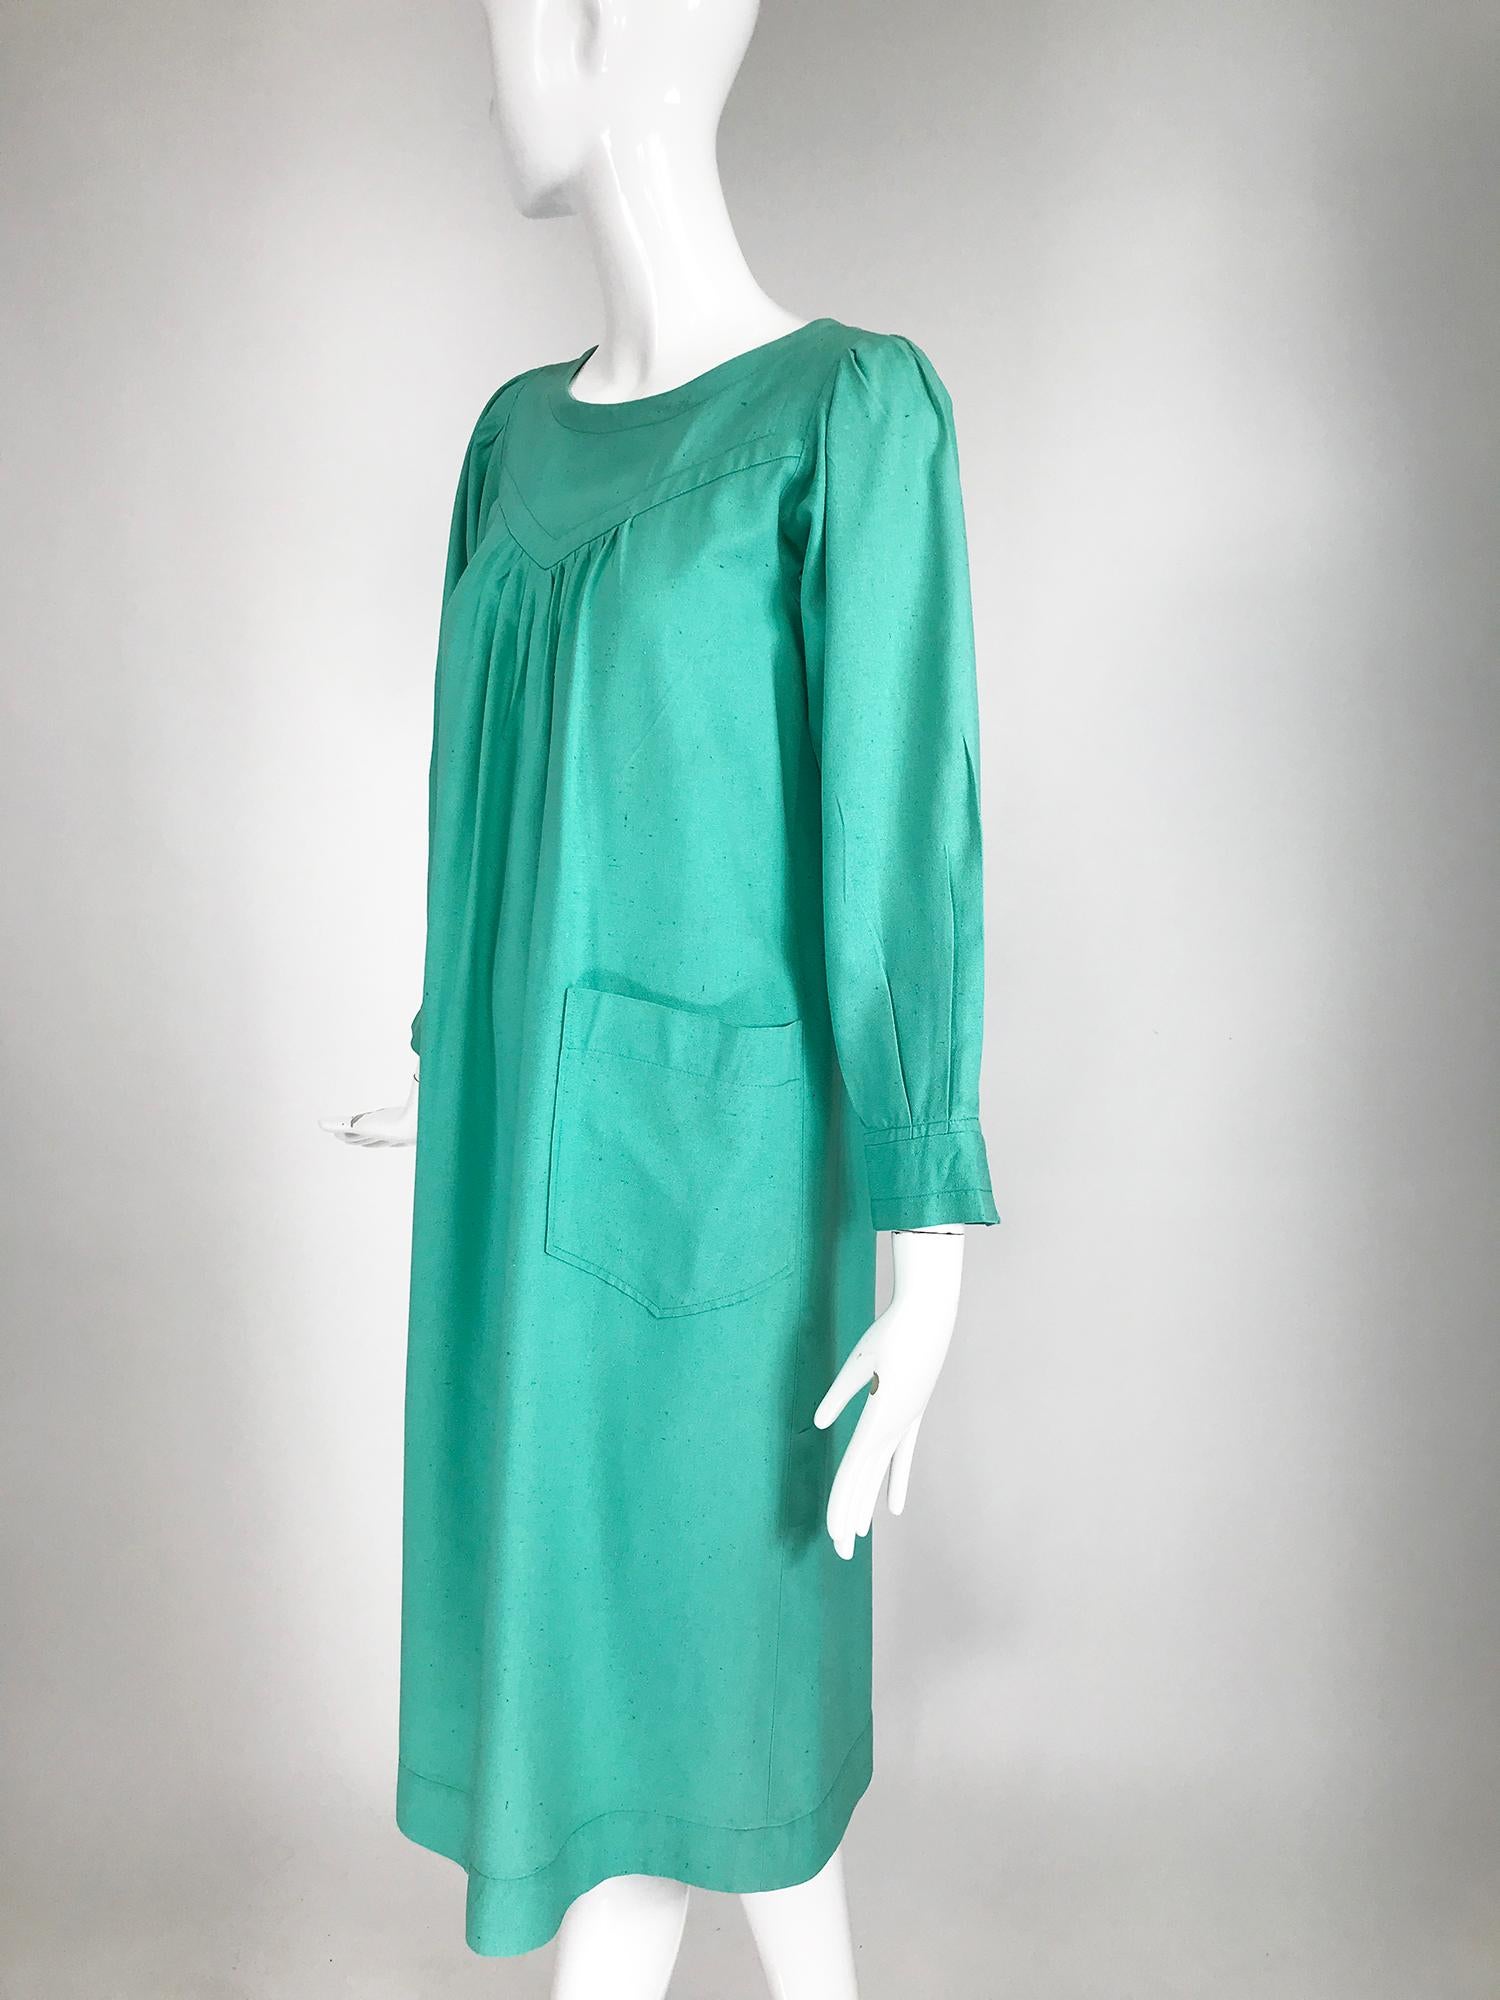 Yves Saint Laurent Rive Gauche Aqua Slub Silk Smock Dress 1970s 5